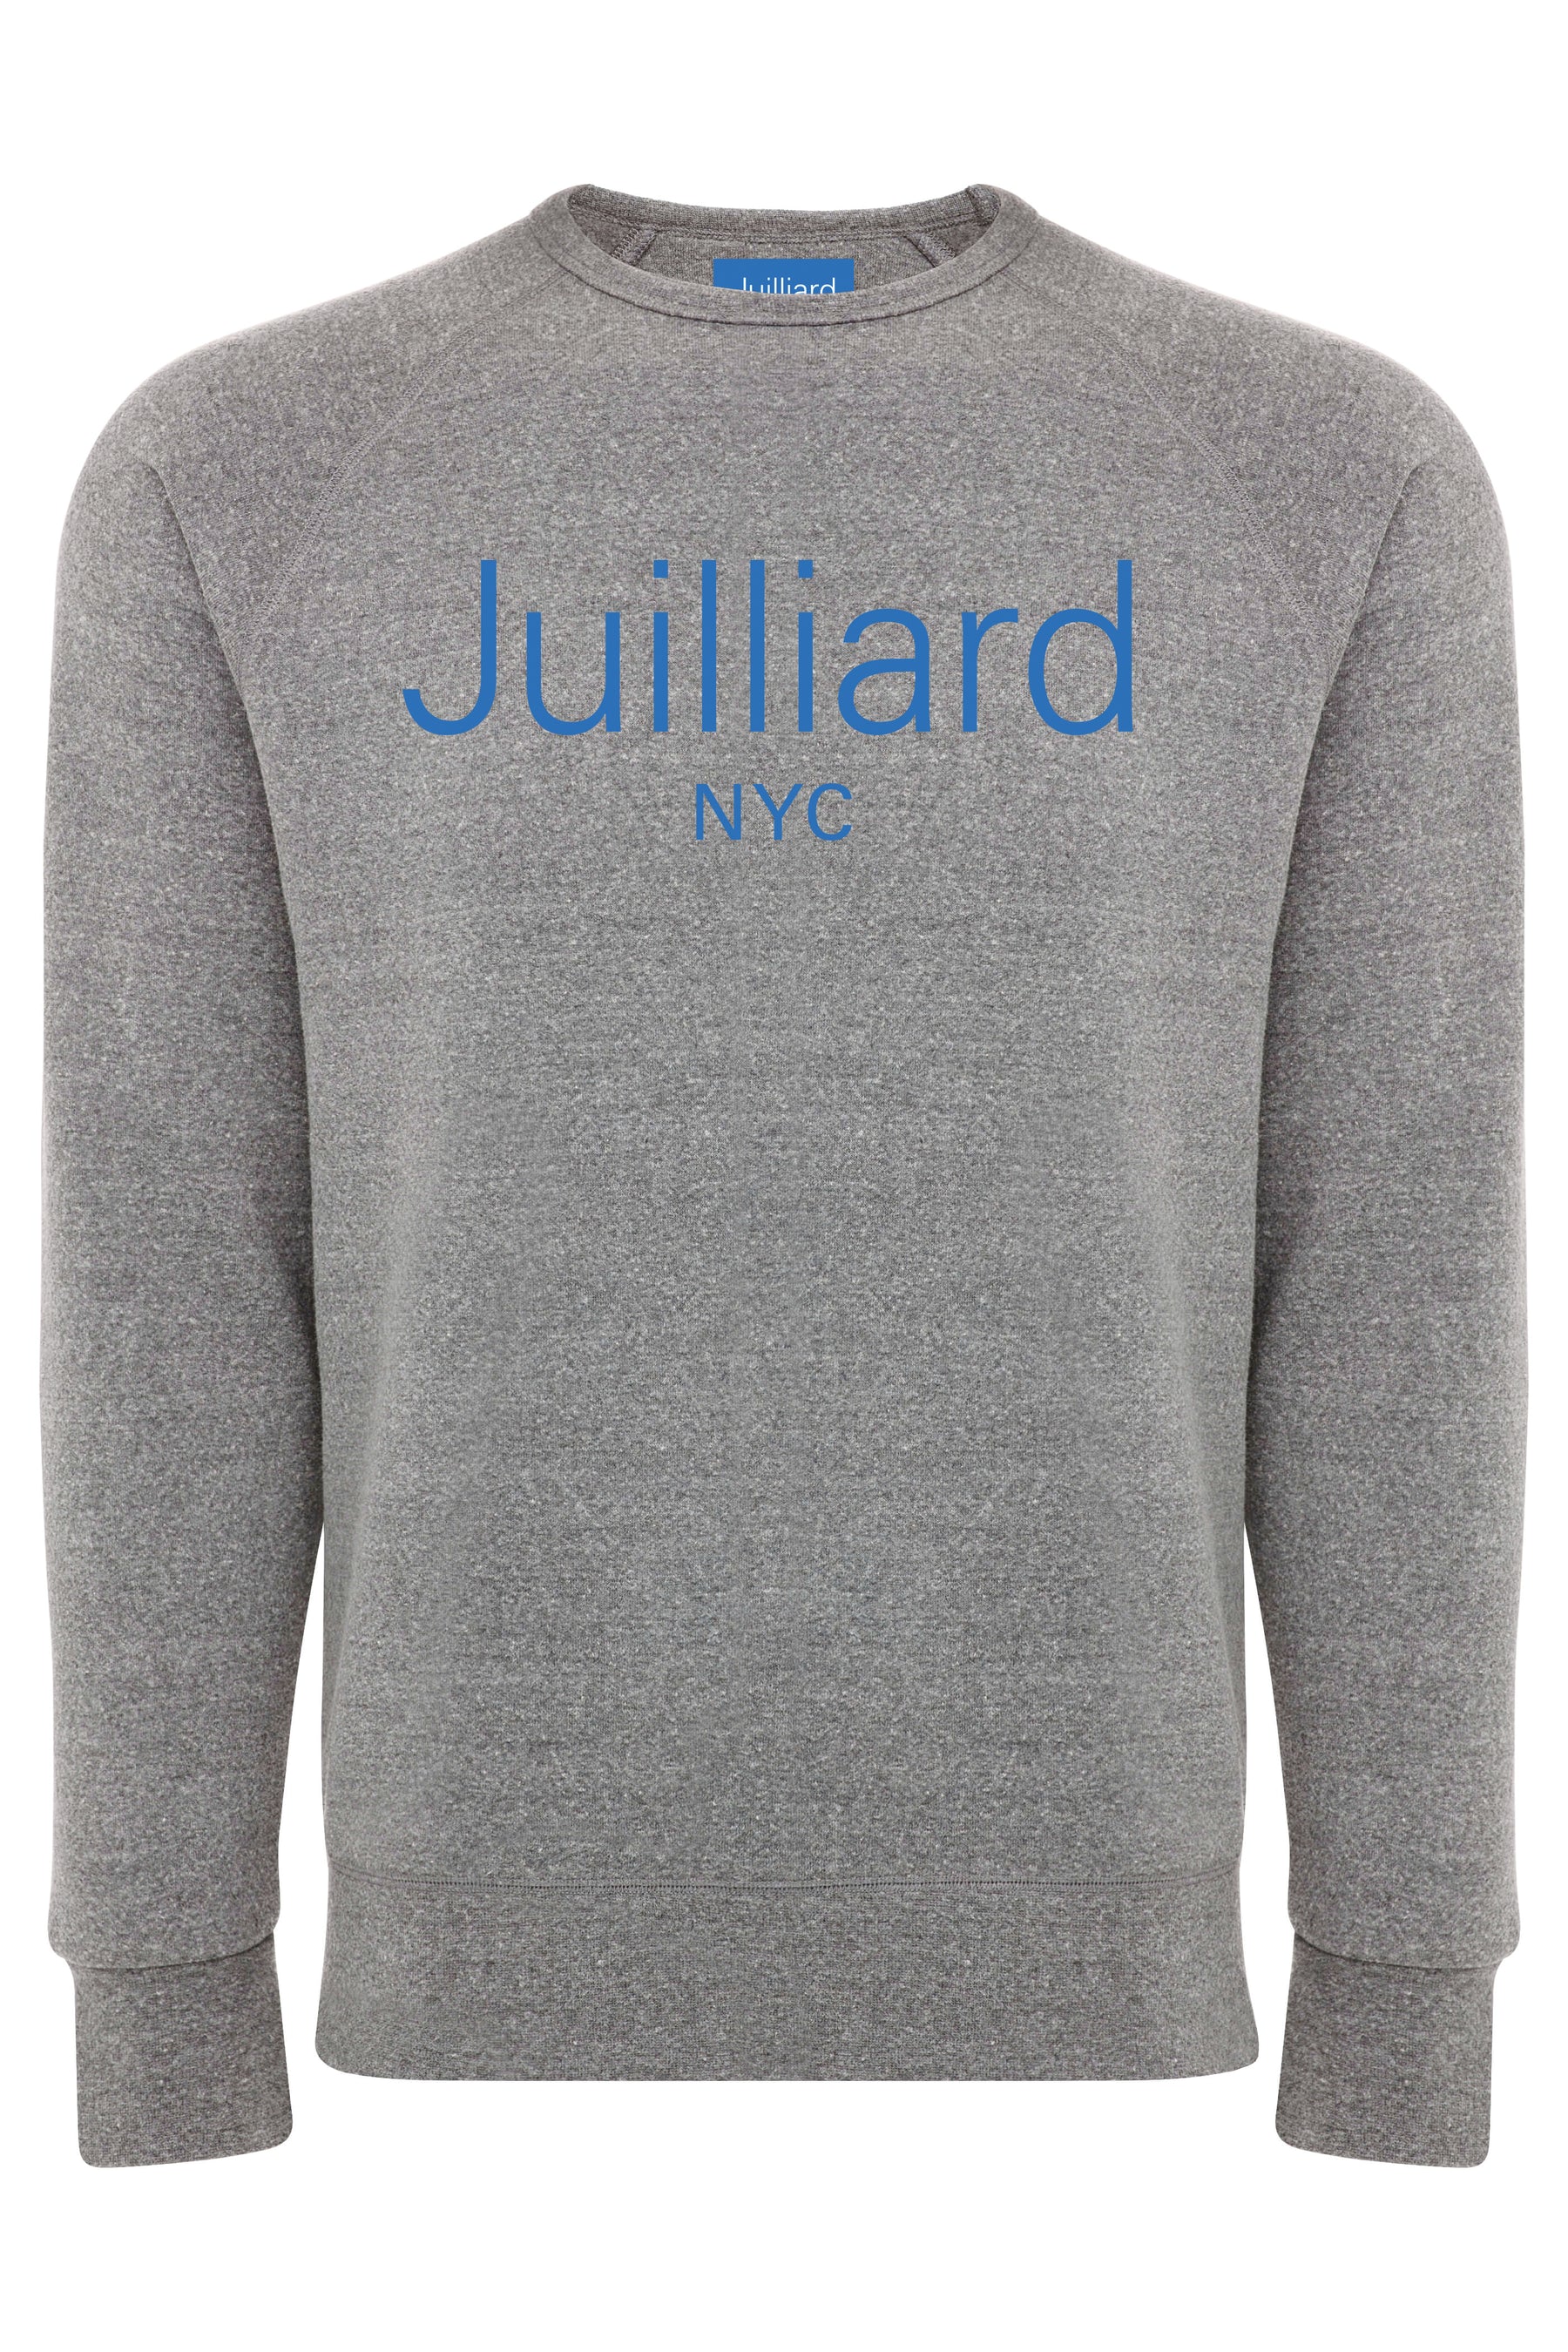 Sweatshirt: Juilliard NYC Gray Crewneck FINAL SALE / CLEARANCE